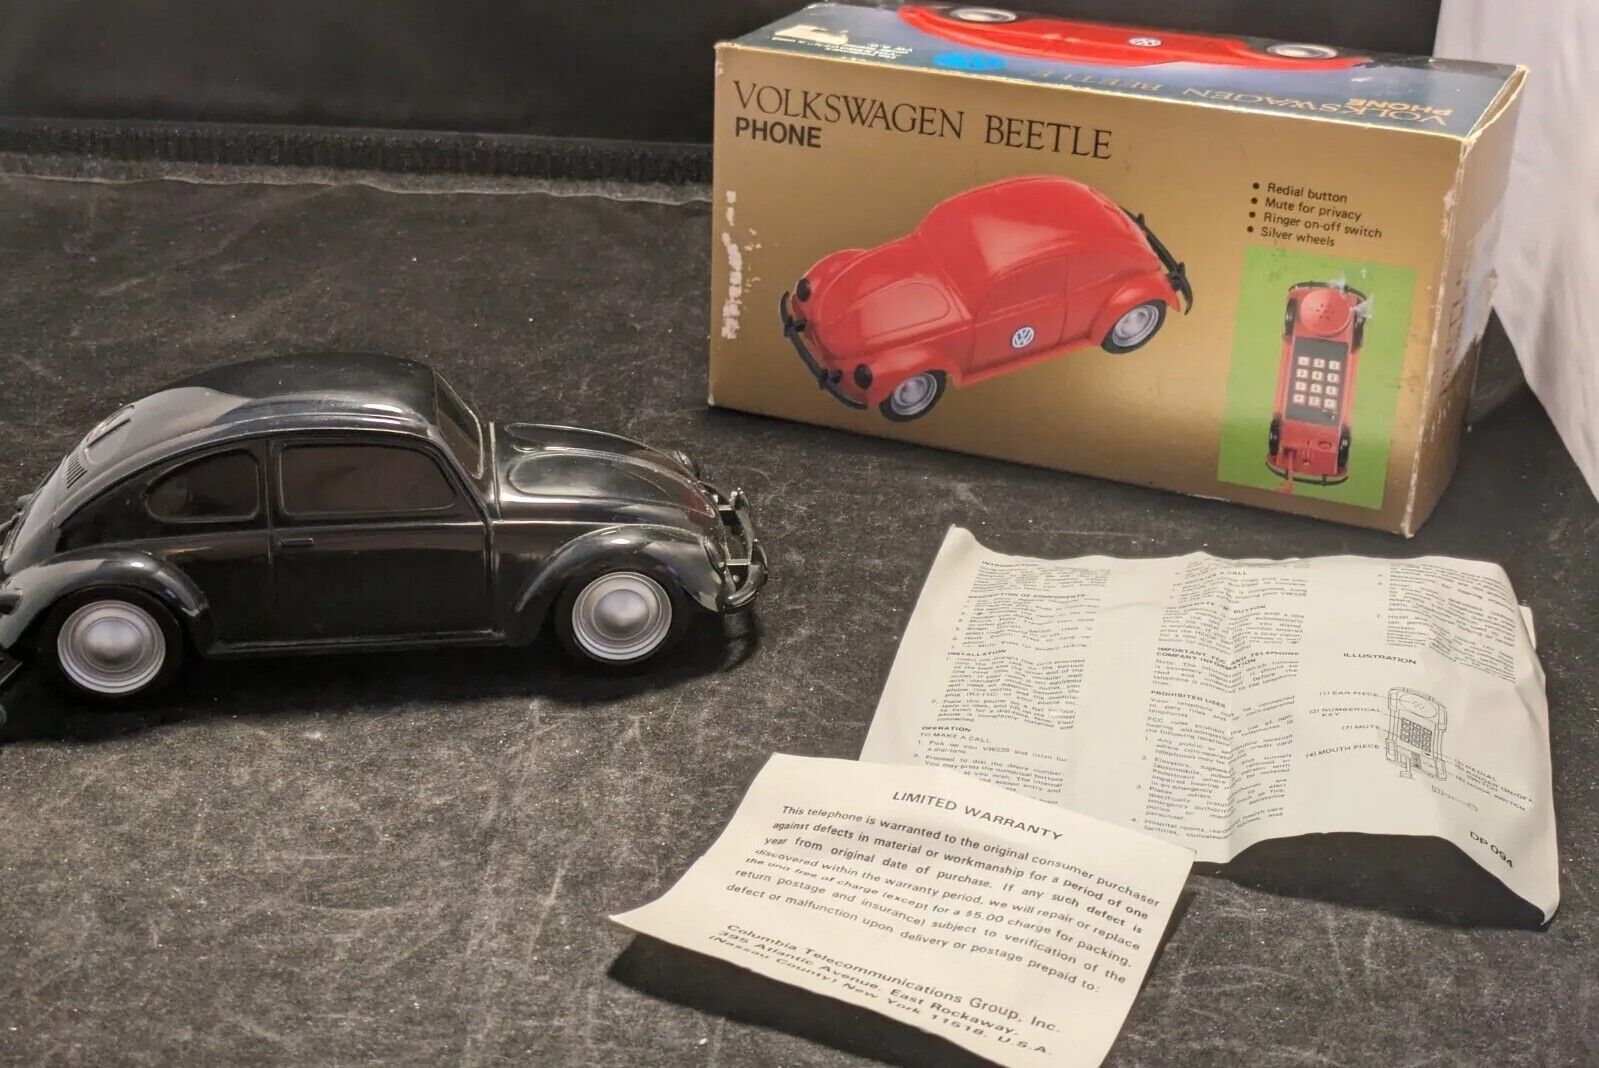 1988 Volkswagen Beetle Telephone Working Condition Rare Landline Phone In Box